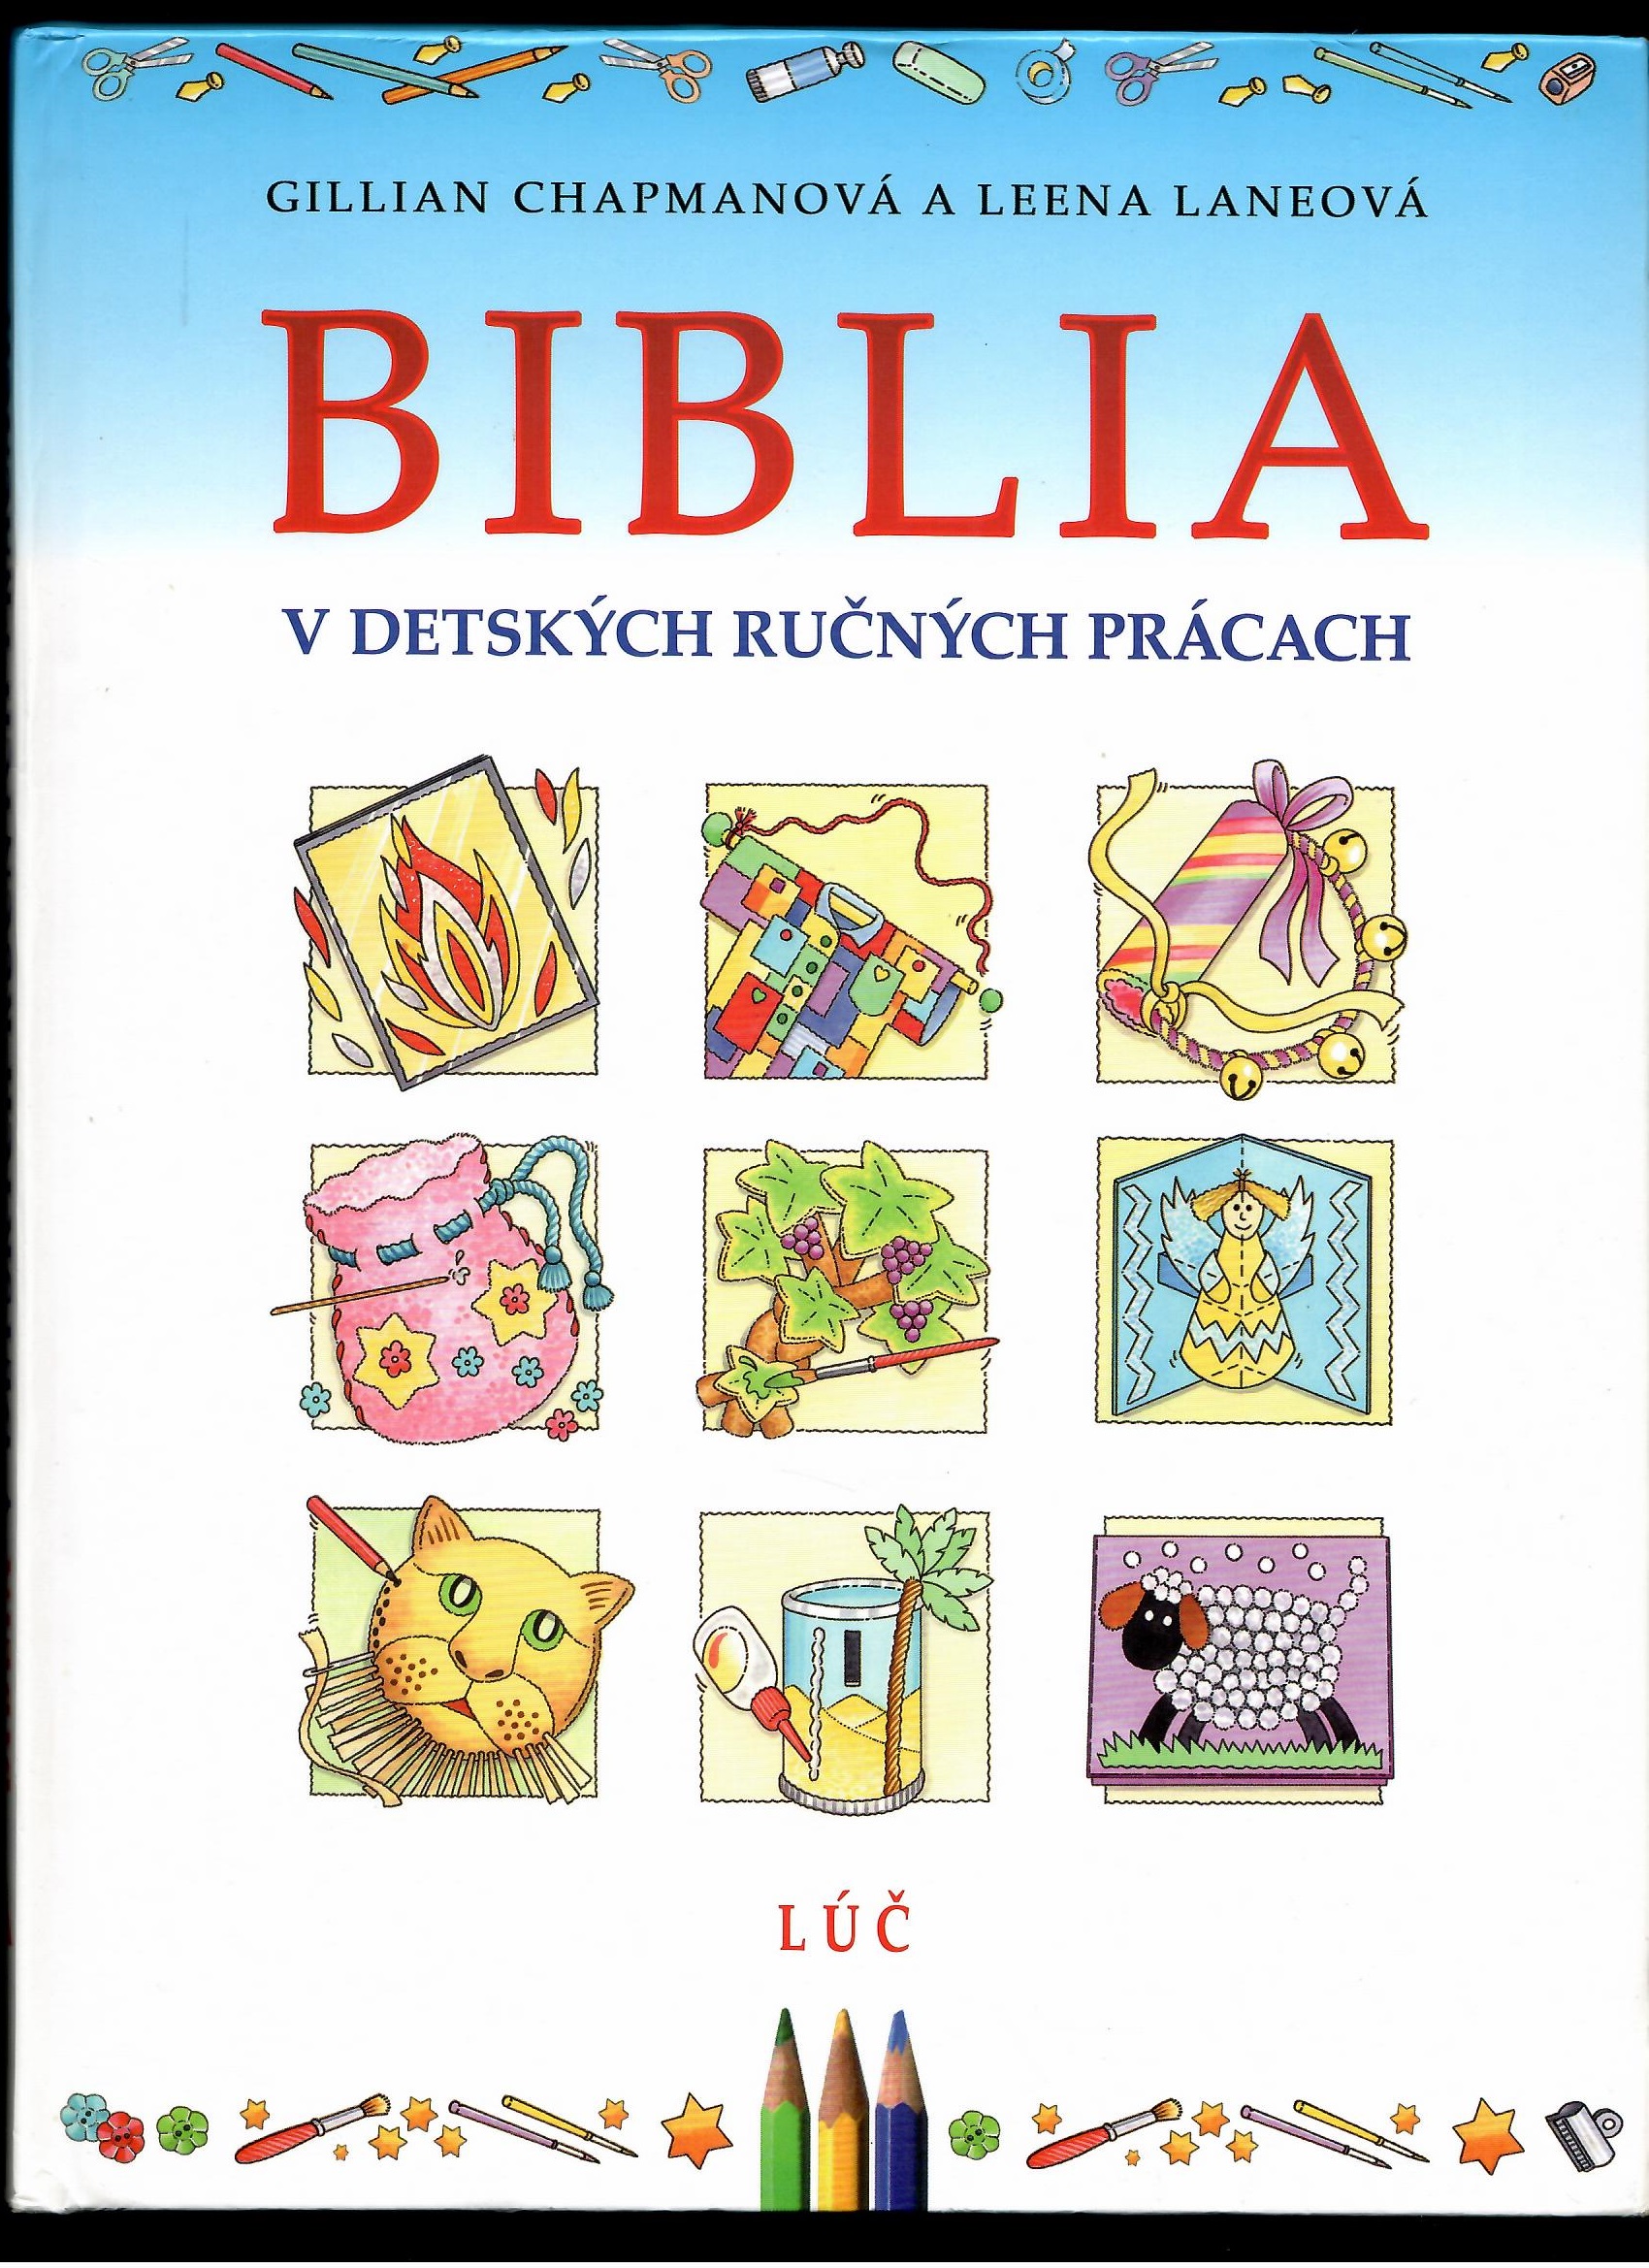 G. Chapmanová: Biblia v detských ručných prácach